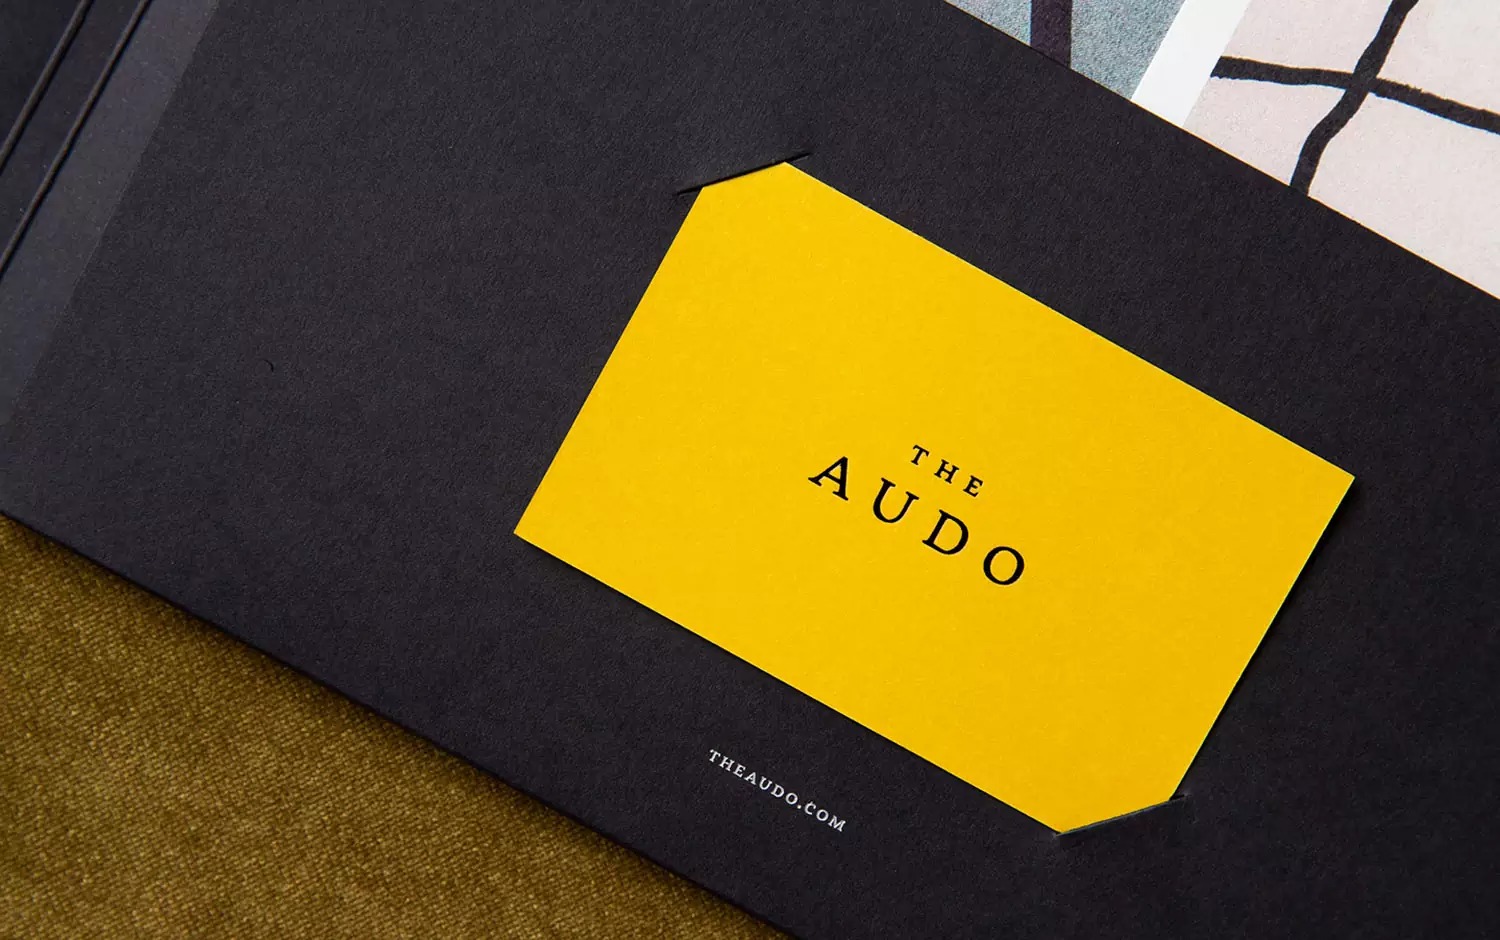 The Audo商业空间品牌设计